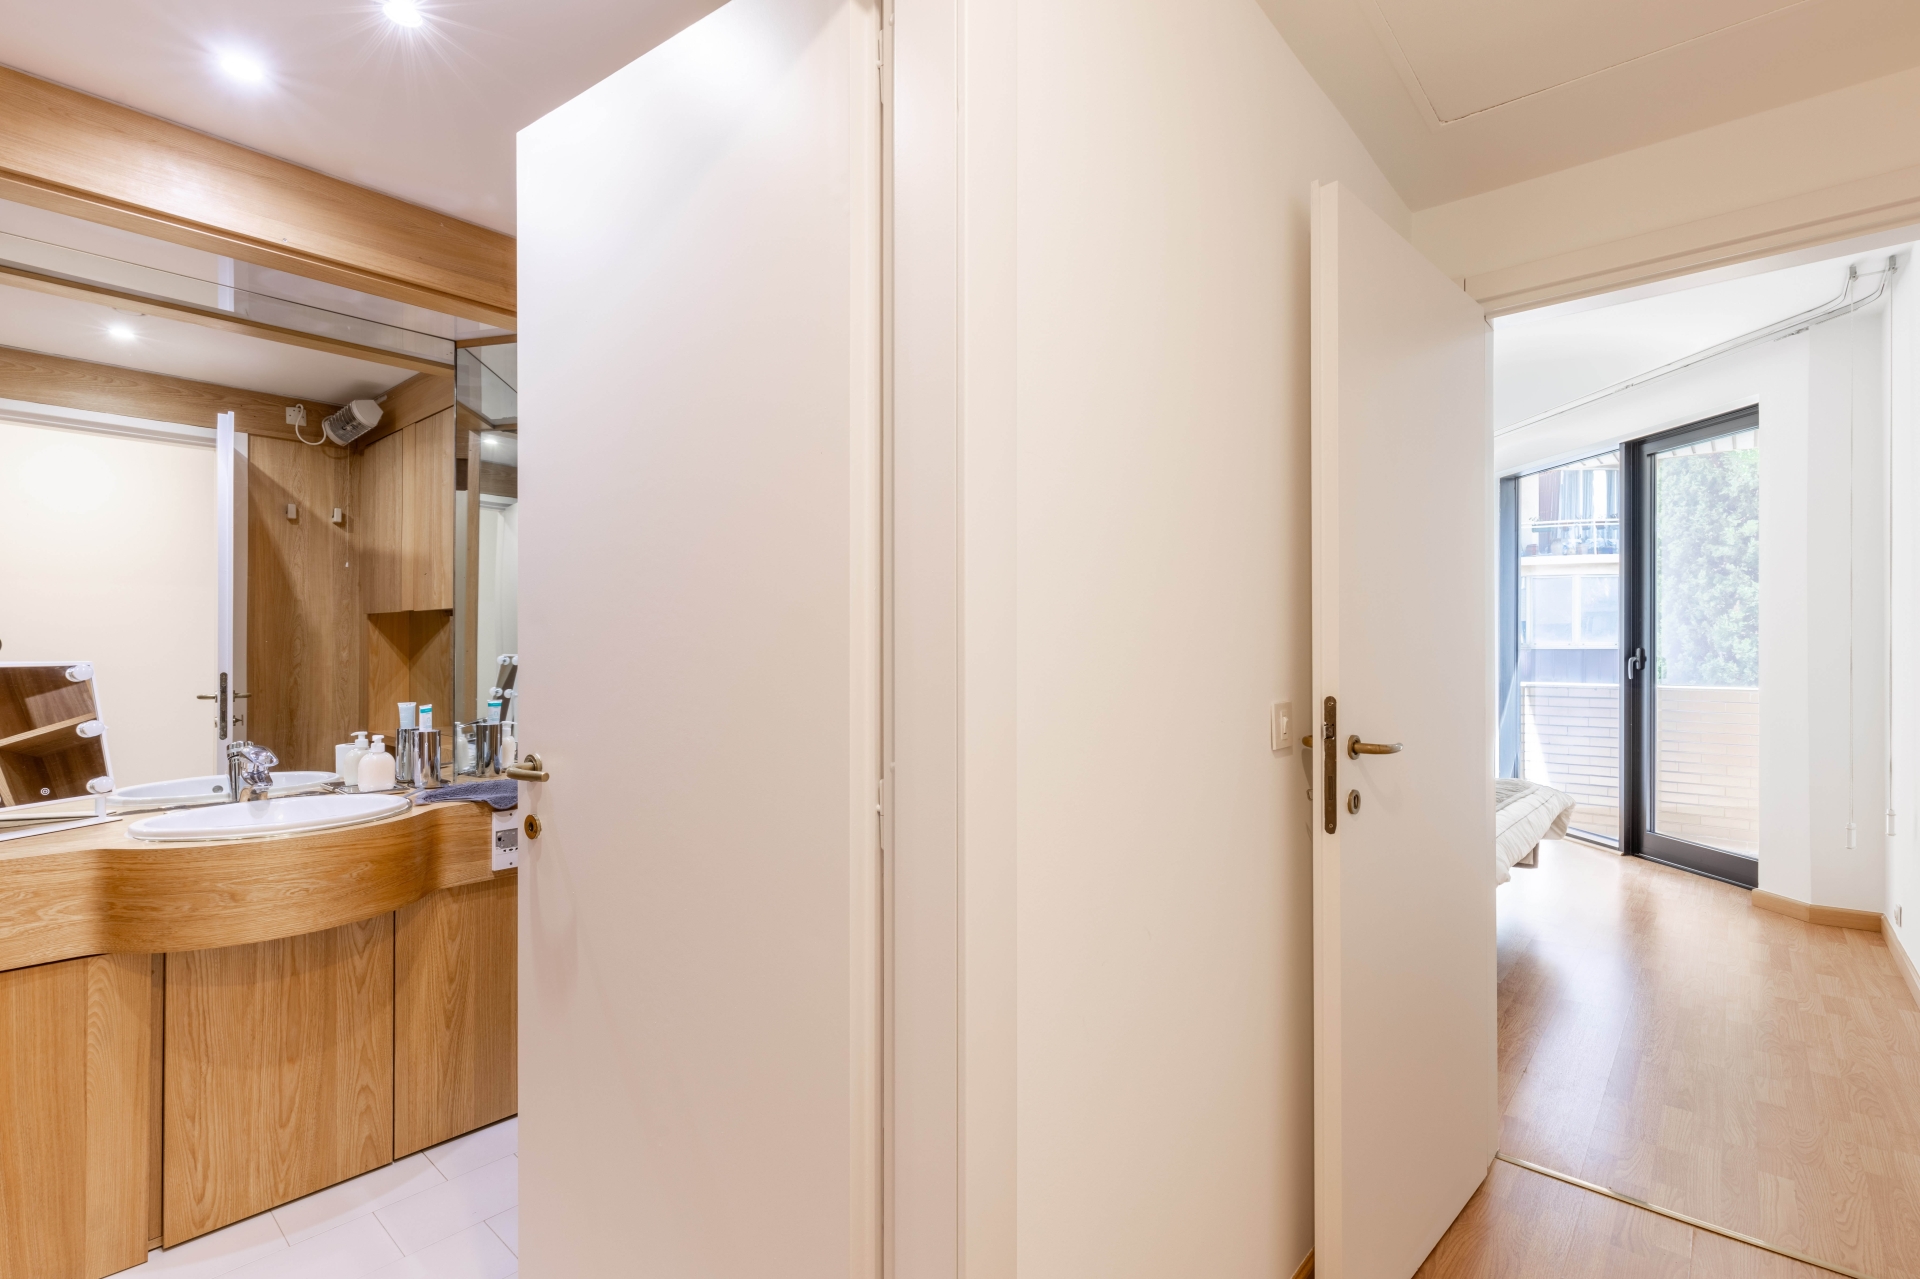 Dotta 2 rooms apartment for sale - SAINT ANDRE - Monte-Carlo - Monaco - imghdr